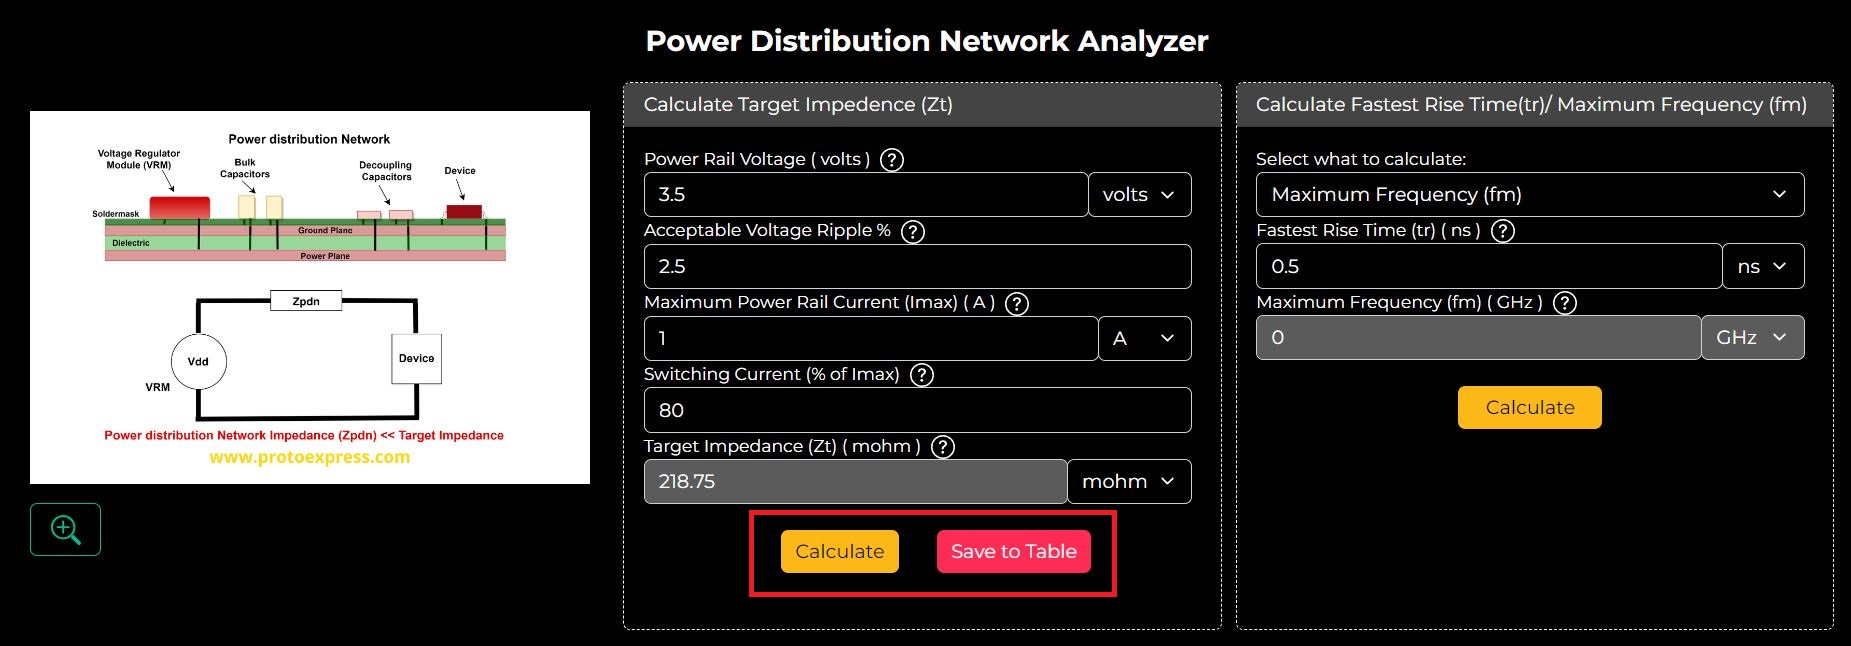 calculate-target-impedance-using-power-distribution-network-analyzer.jpg